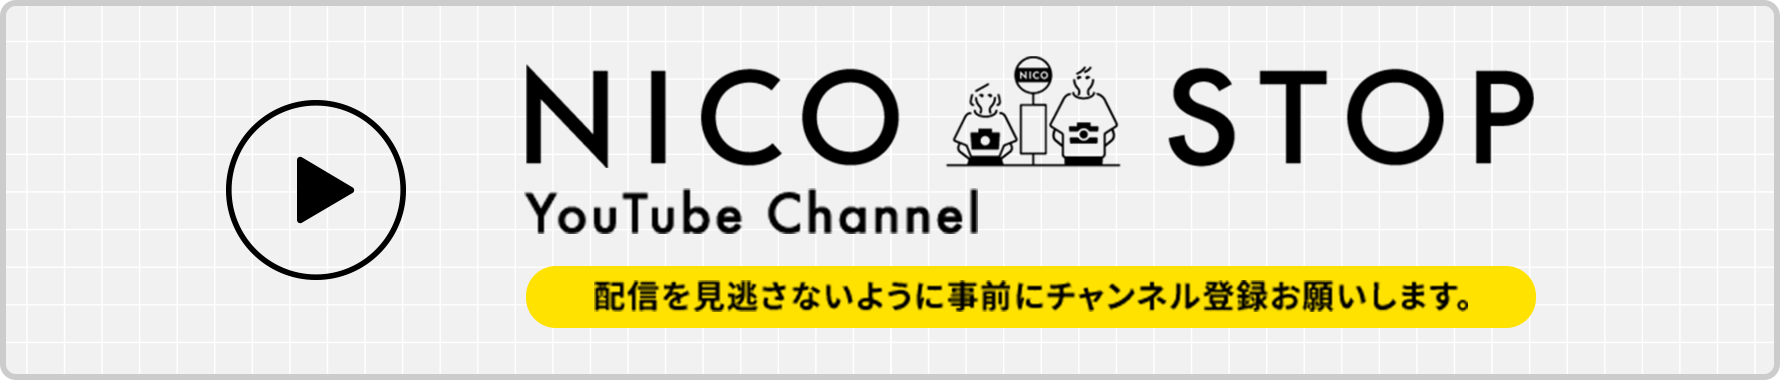 NICO STOP YouTube Channel 配信を見逃さないように事前にチャンネル登録をお願いします